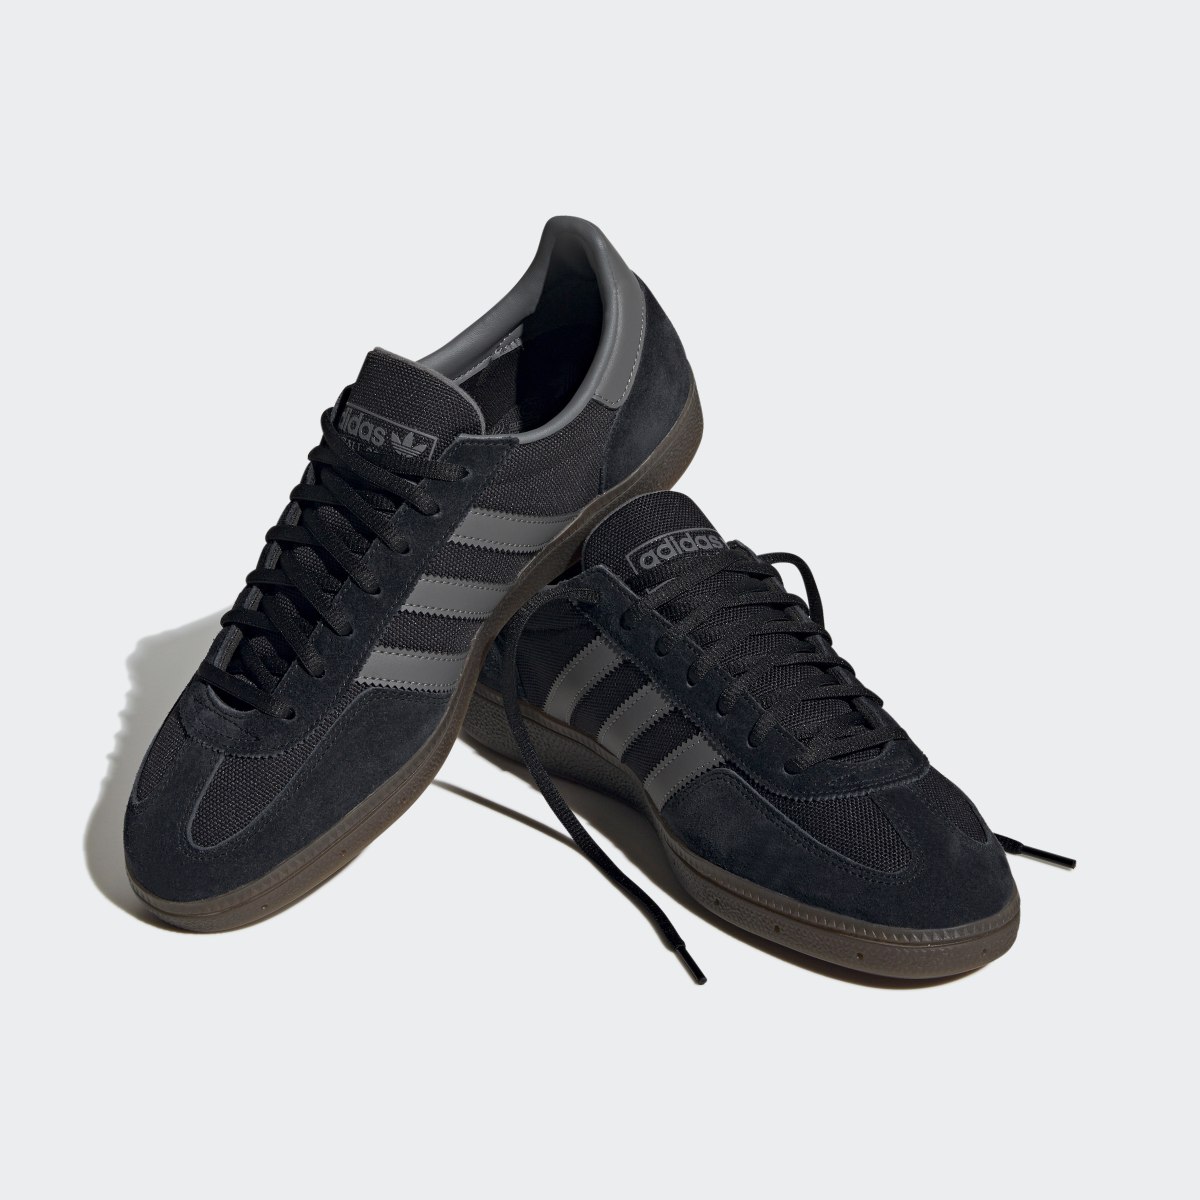 Adidas Handball Spezial Shoes. 5